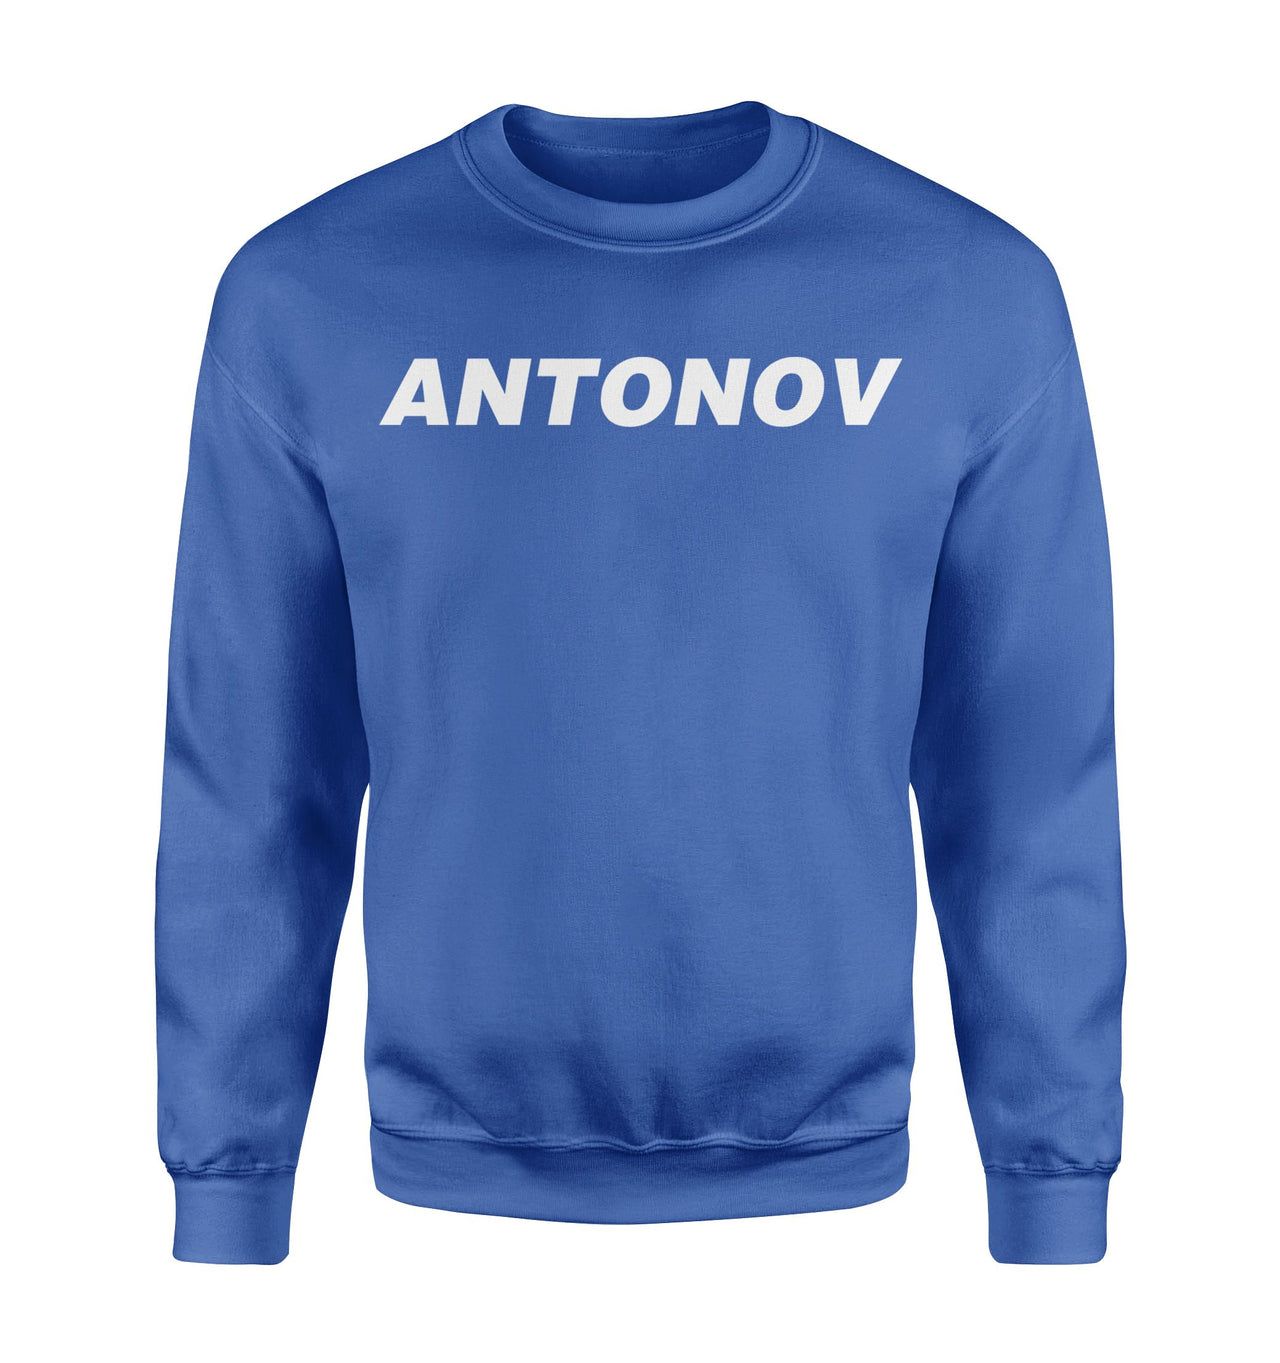 Antonov & Text Designed Sweatshirts